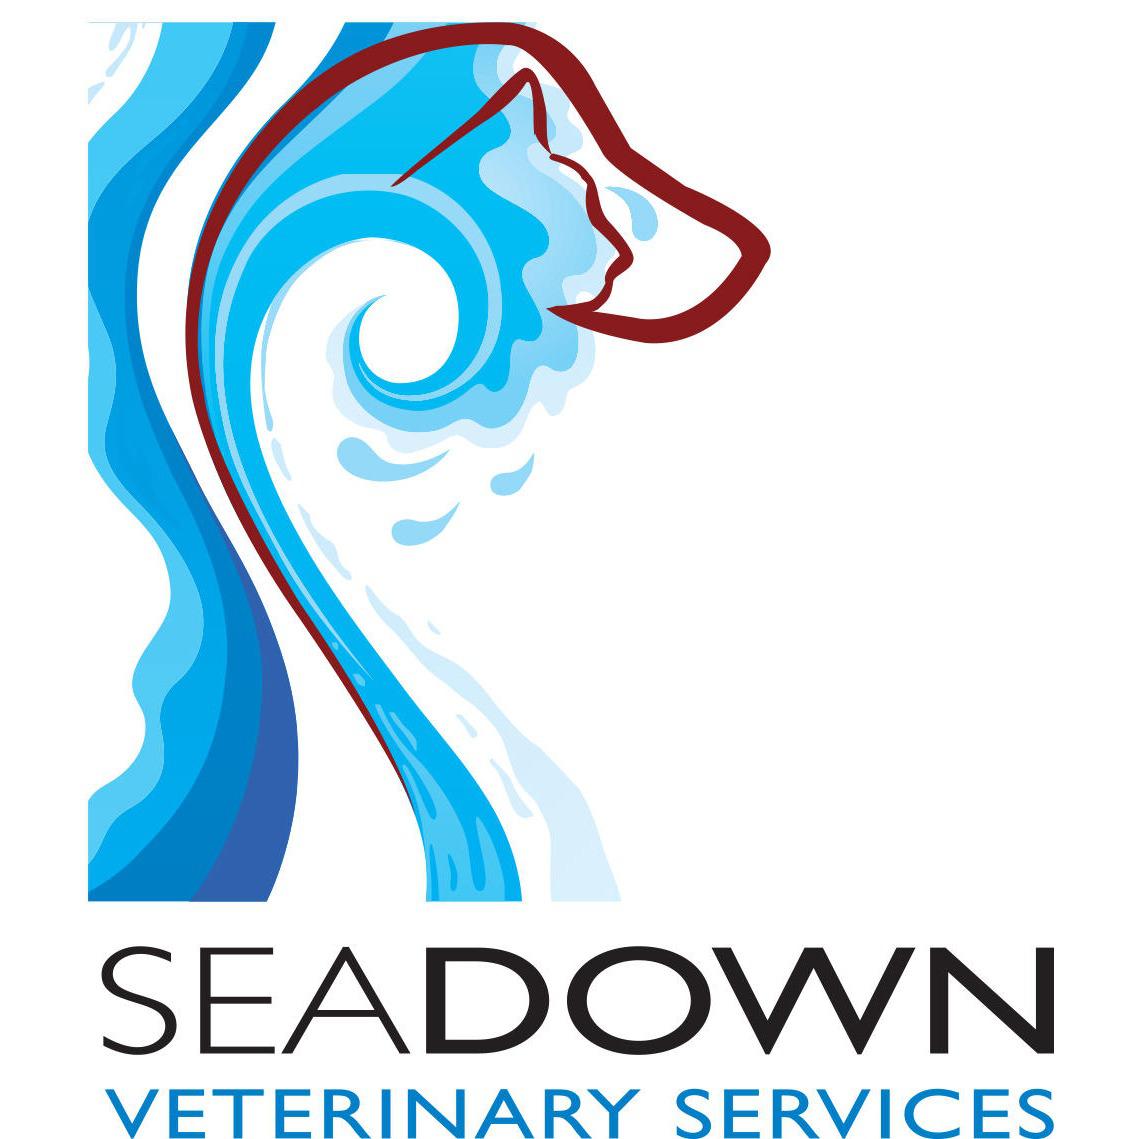 Seadown Veterinary Services - Totton Surgery Southampton 02380 663817